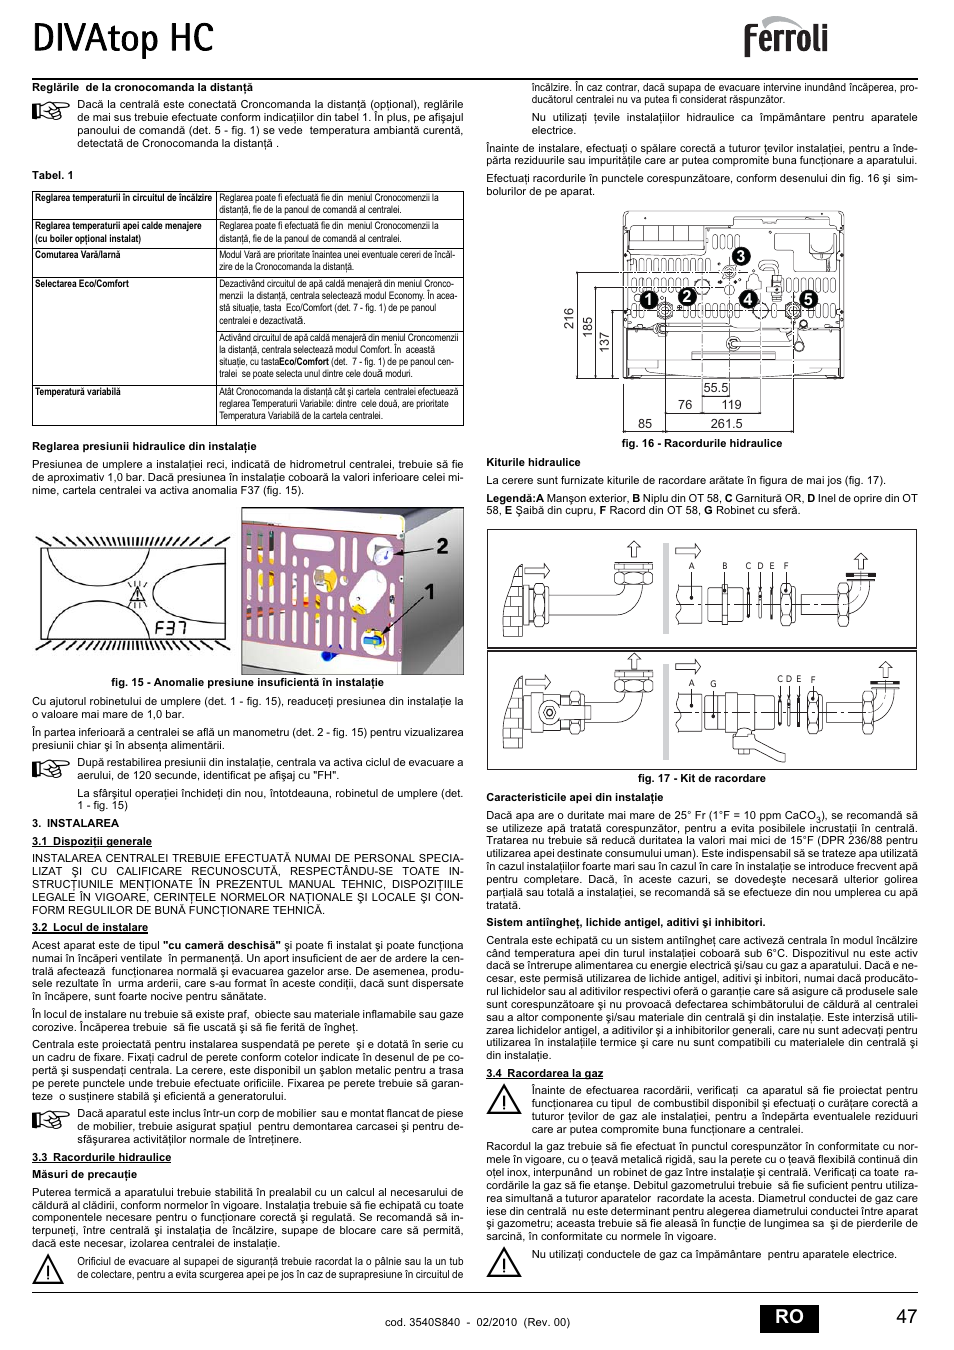 Divatop hc, 47 ro | FERROLI Divatop H C User Manual | Page 47 / 72 |  Original mode